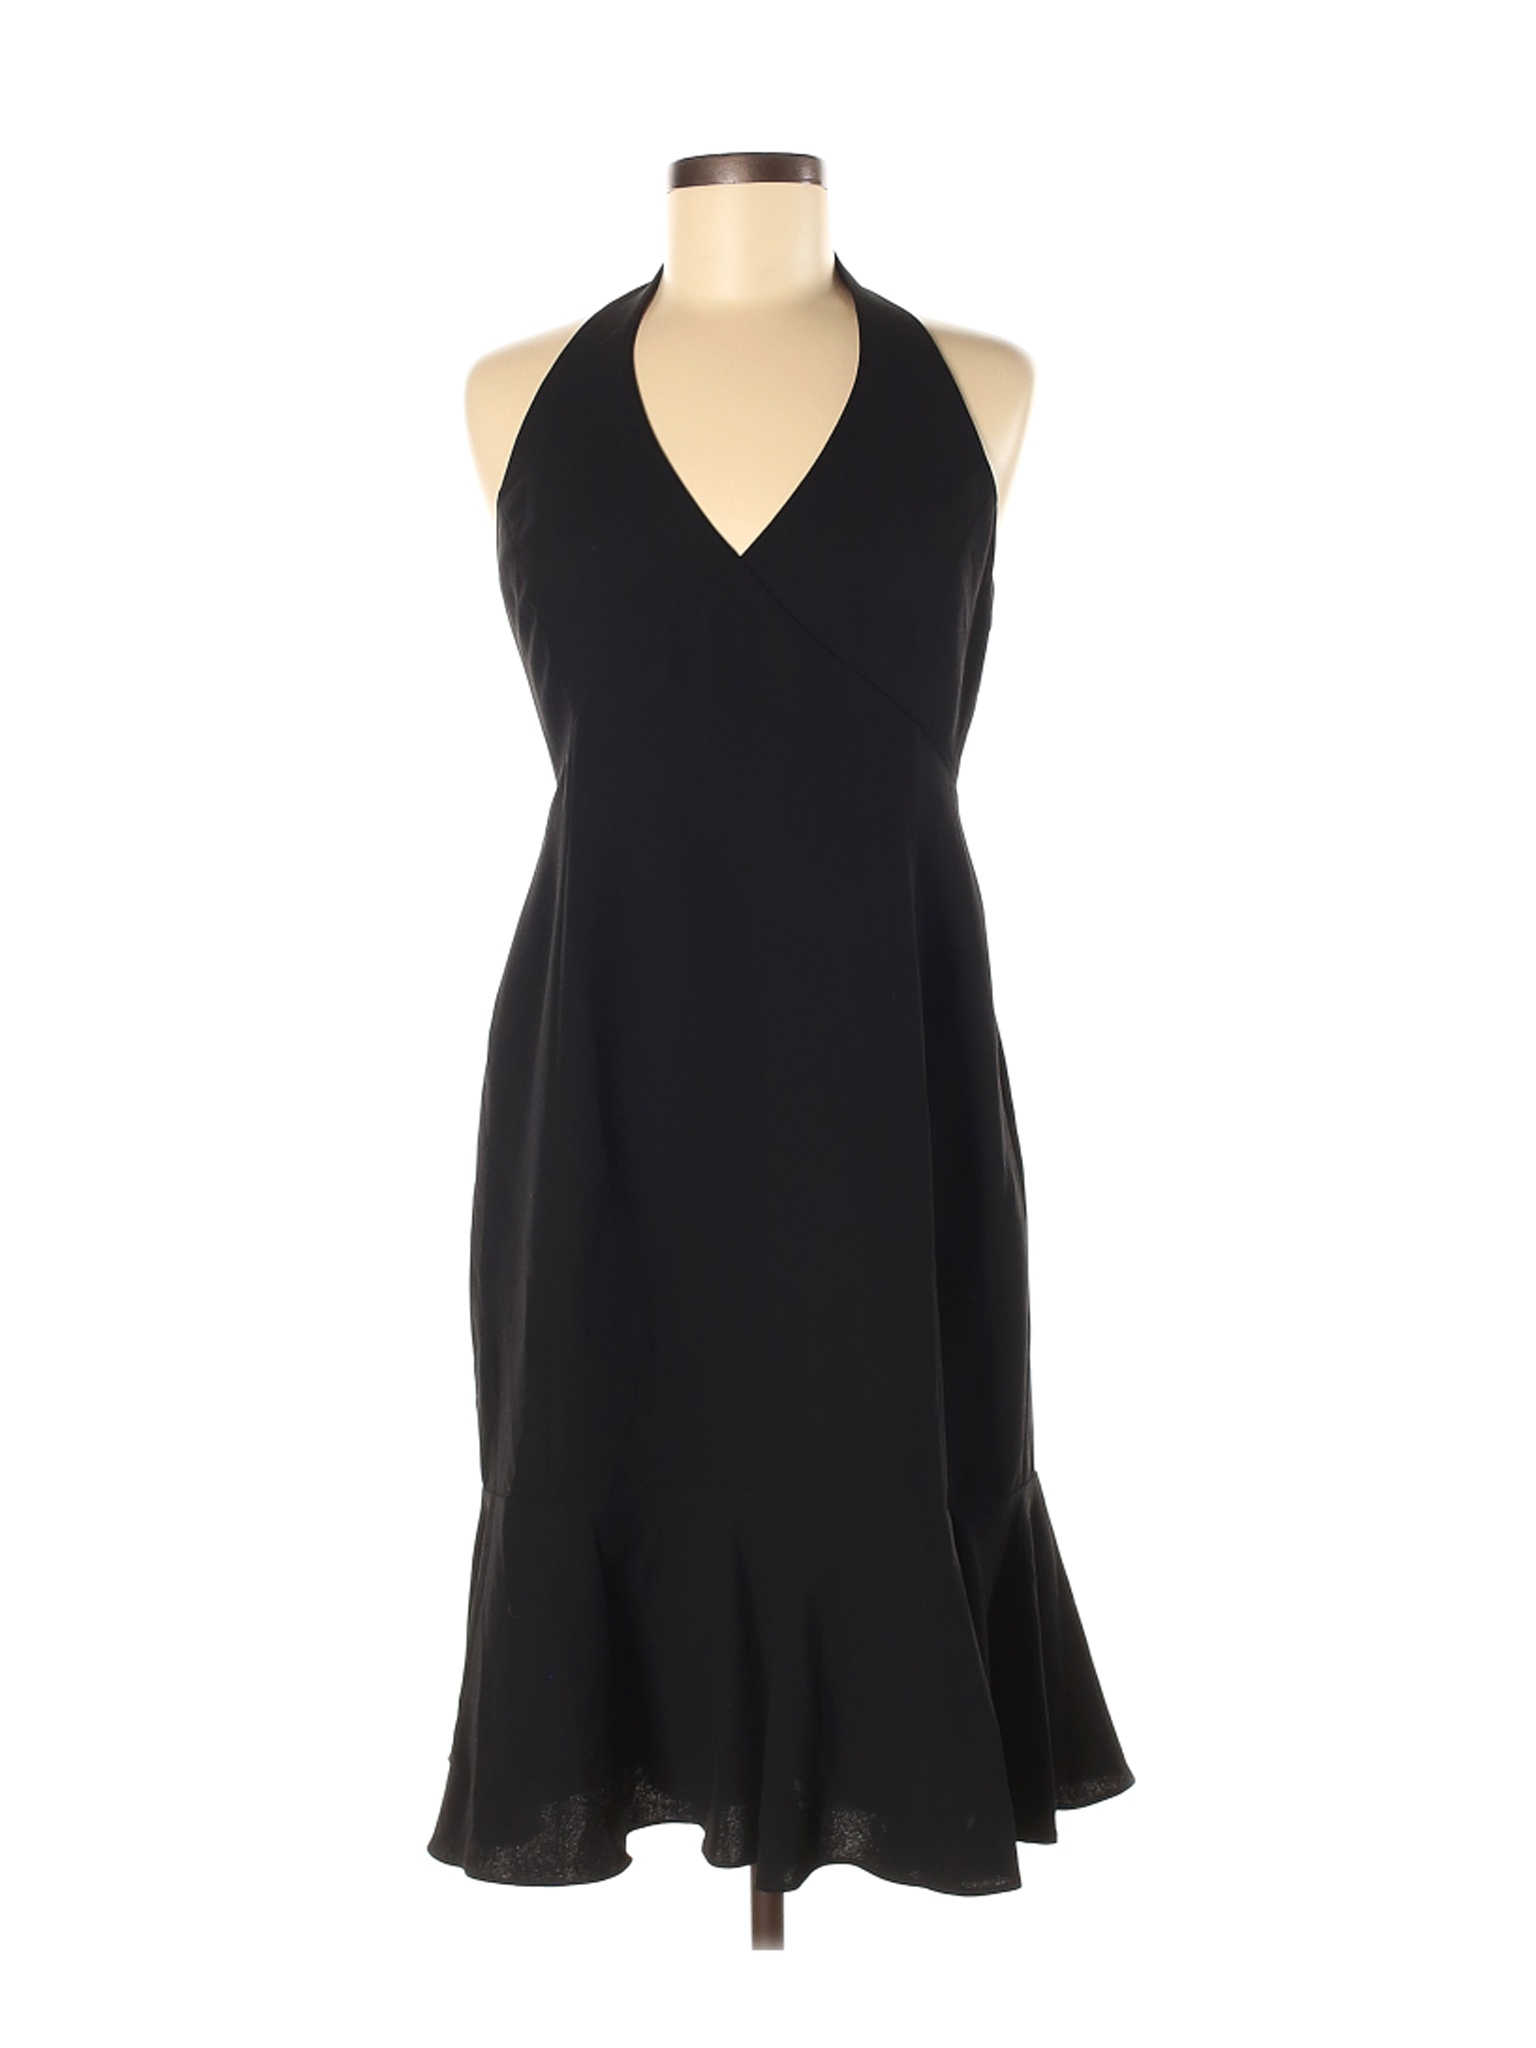 NWT Chaps Women Black Cocktail Dress 6 | eBay